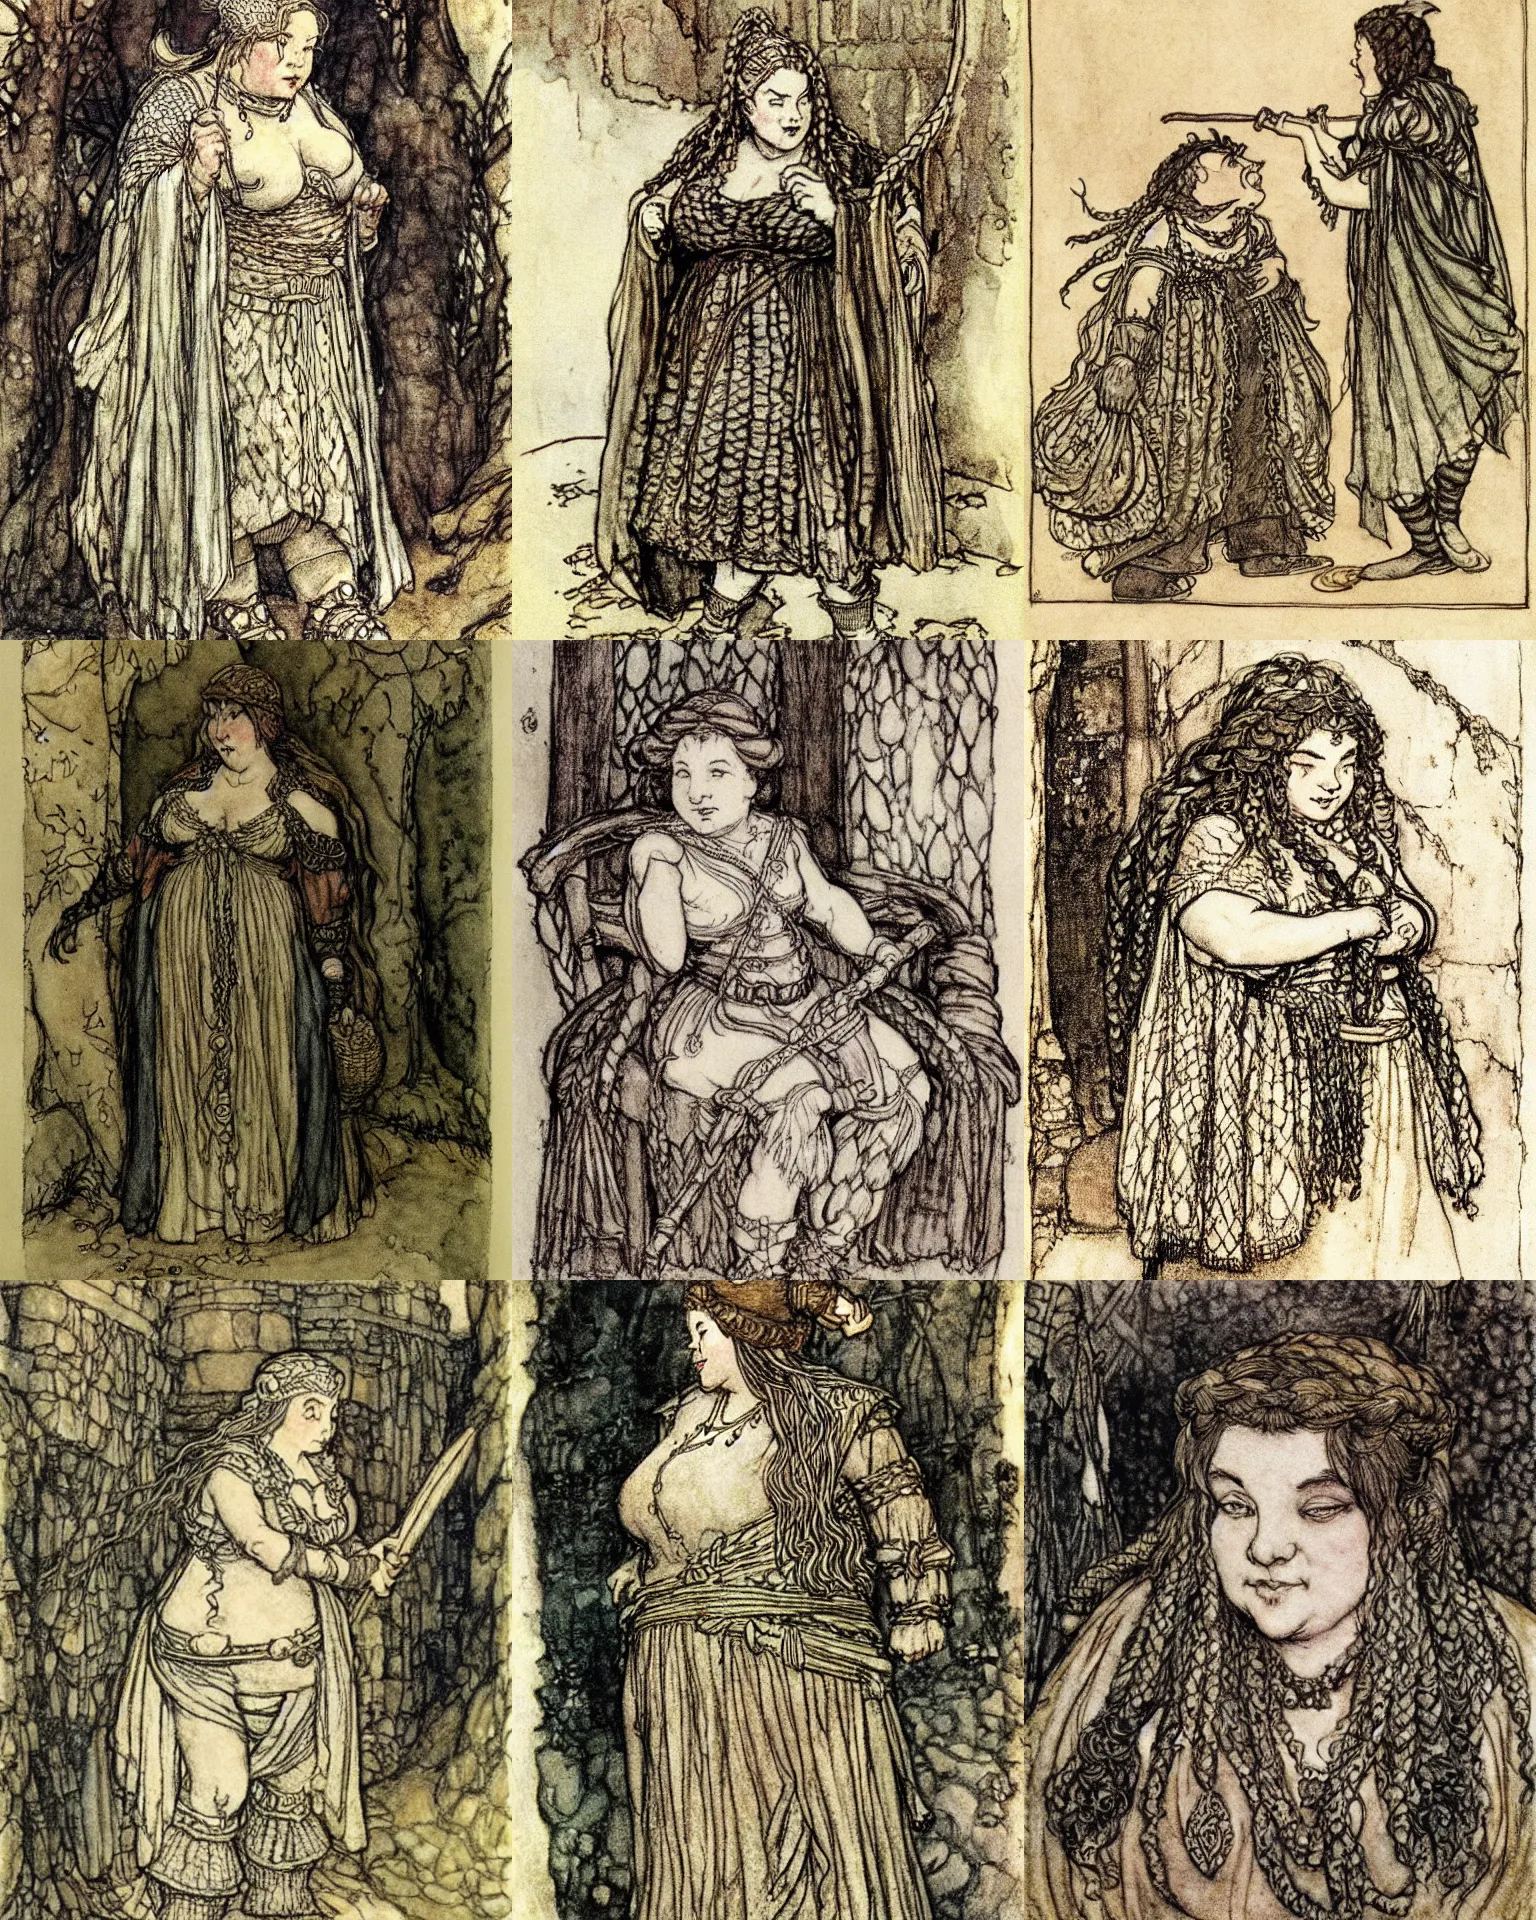 Prompt: female dwarven noblewoman, chubby short stature, braided intricate hair, by arthur rackham